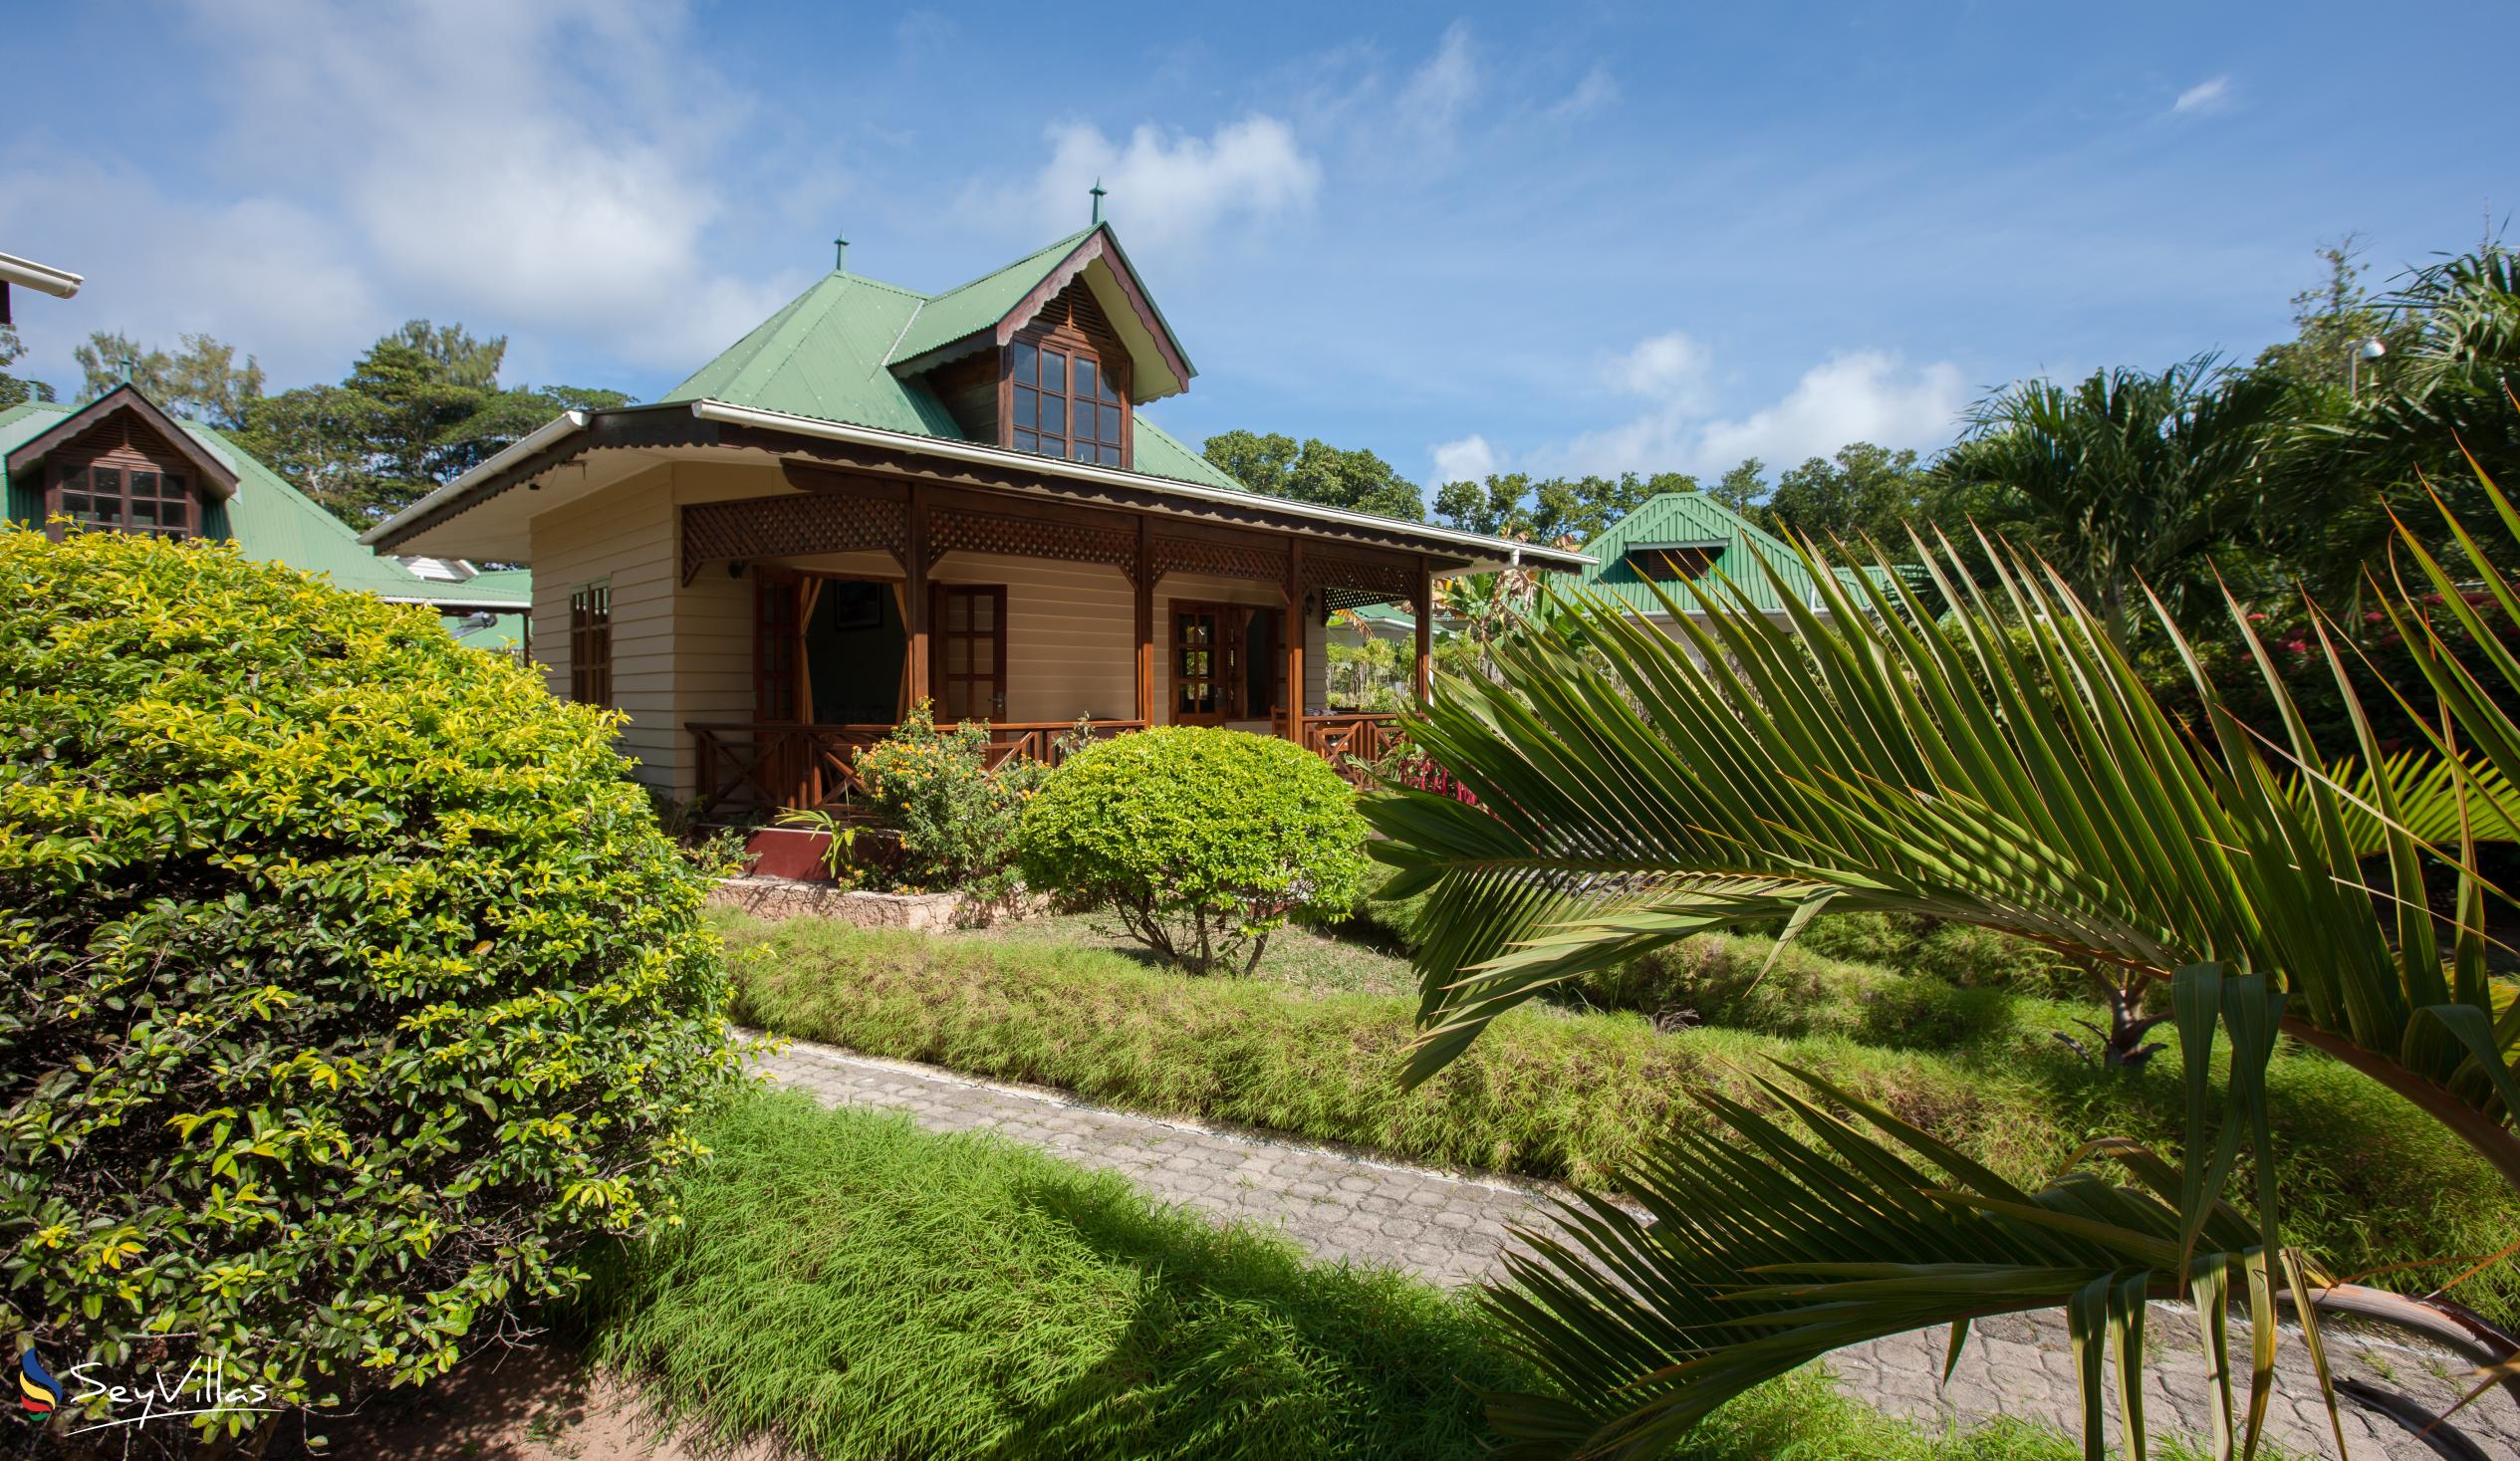 Foto 6: Villa Creole - Aussenbereich - La Digue (Seychellen)